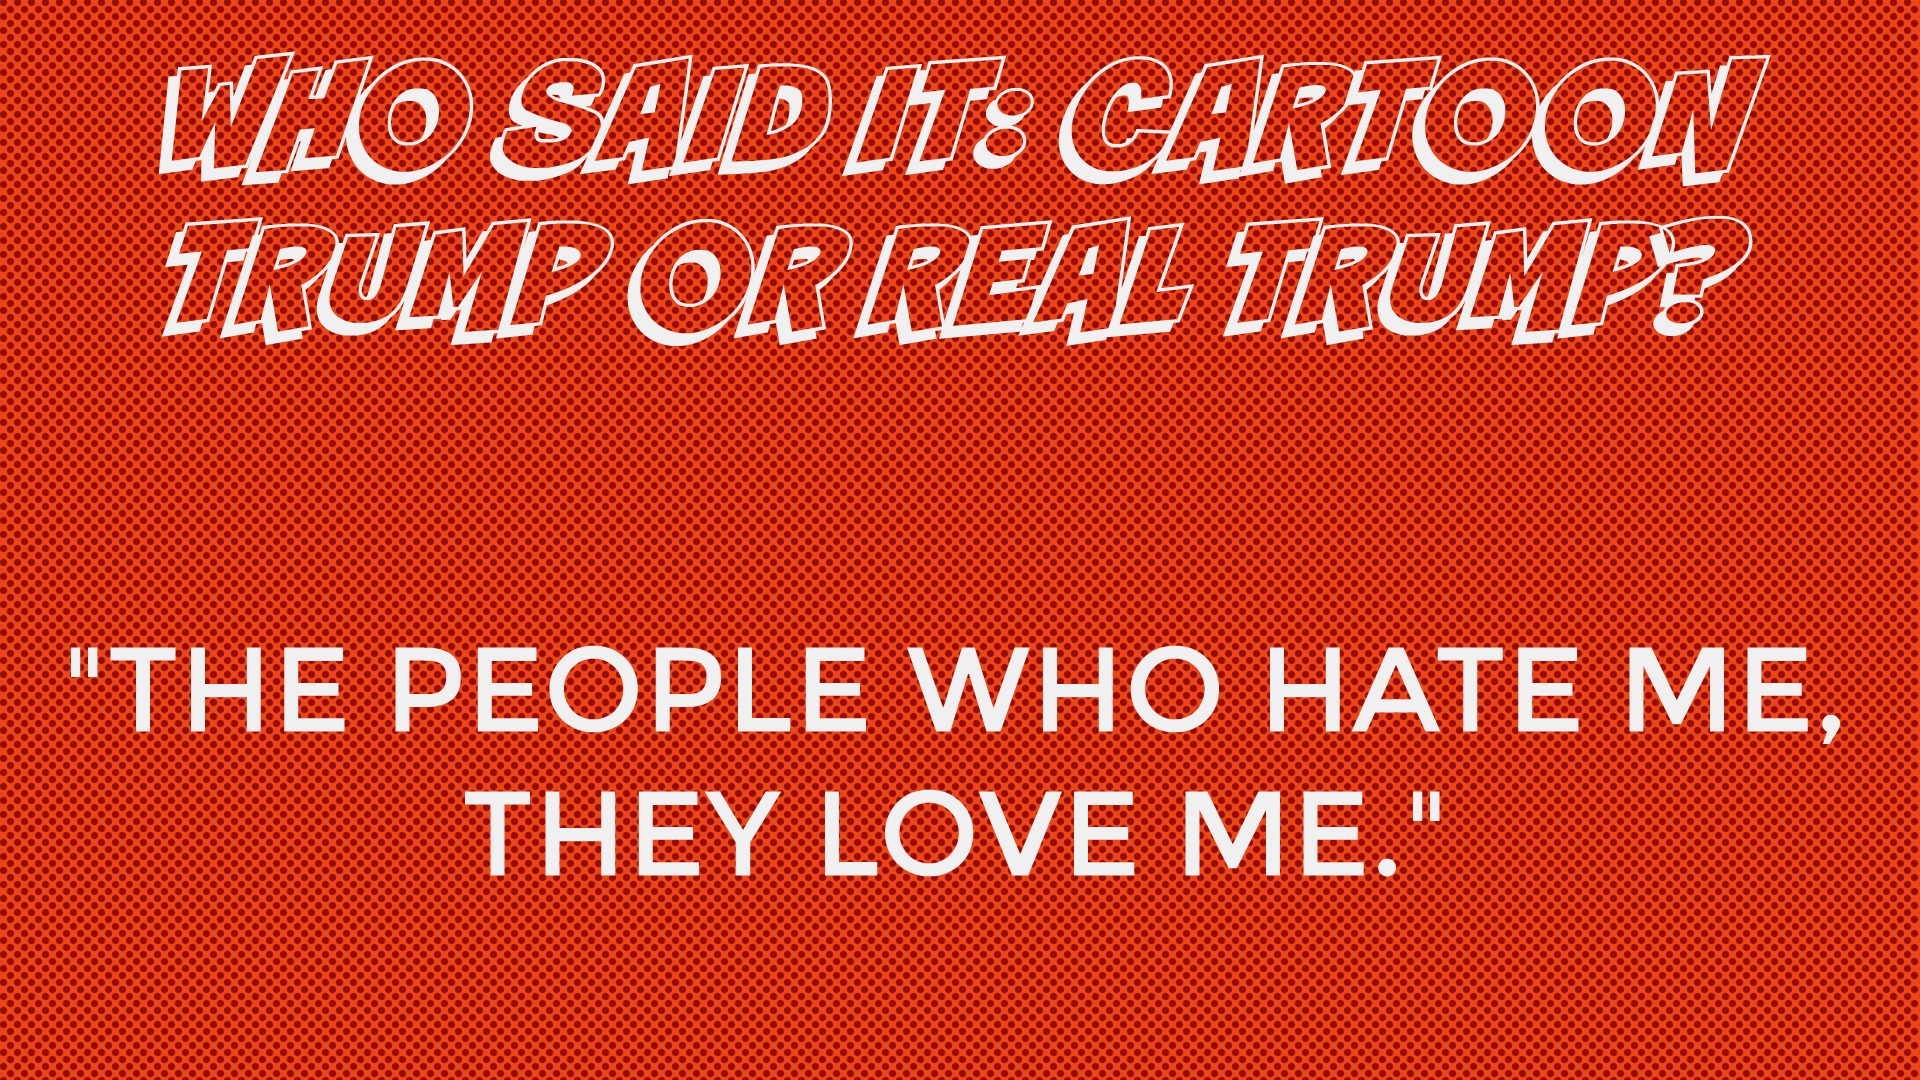 Who said it: Cartoon Trump or Real Trump?